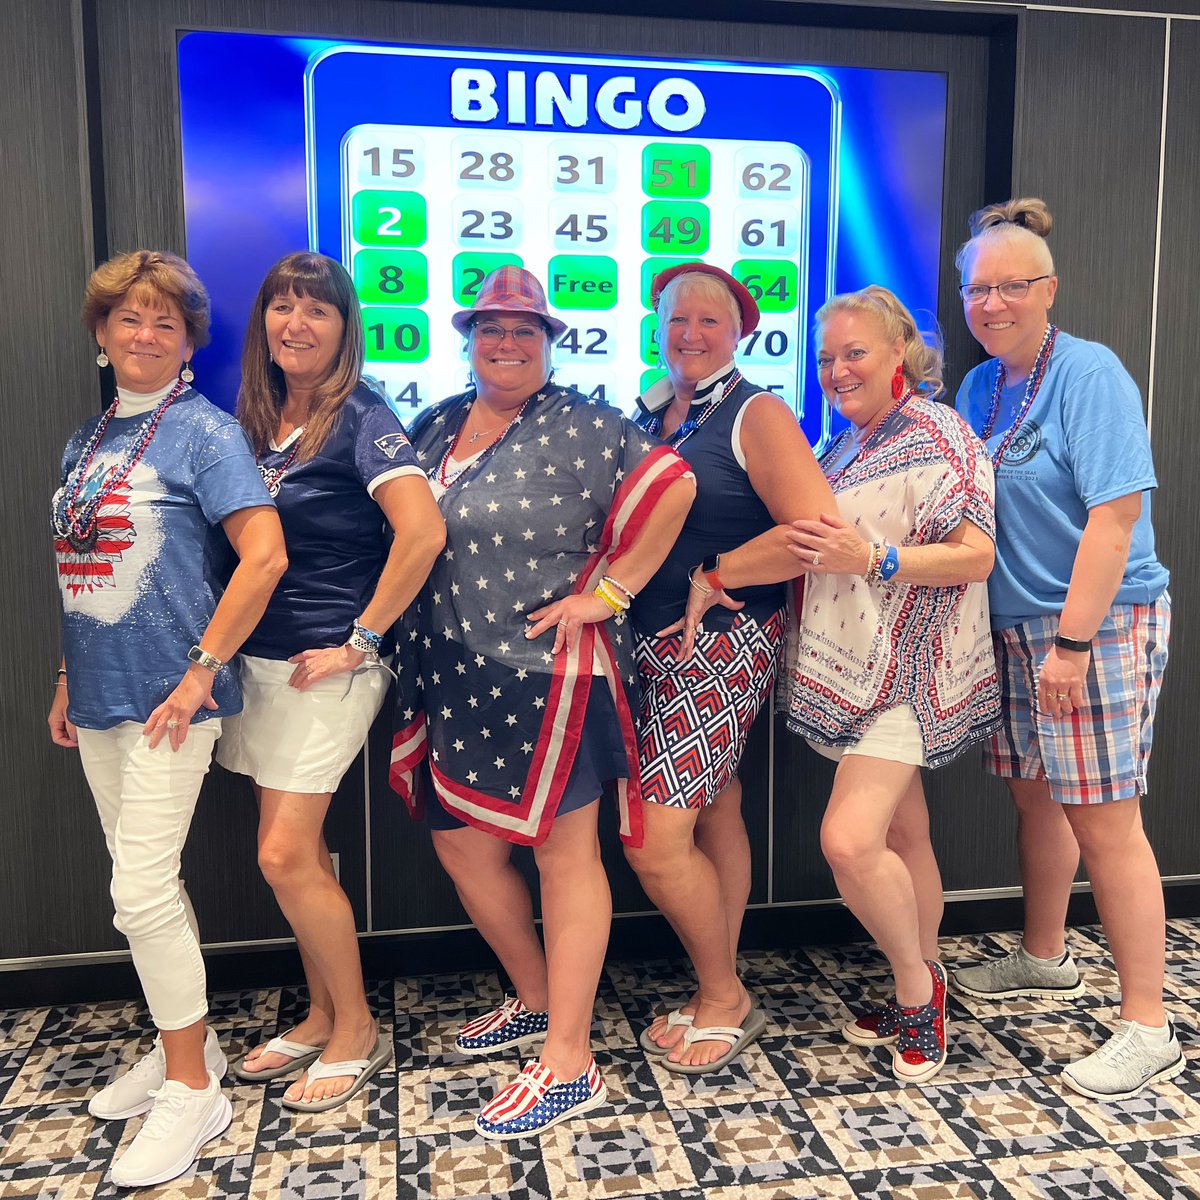 We ♥️ this group of Bingo Babes! 

#BingoCruising #BingoCruise #BingoCruise2023 #Cruise #Bingo #Travel #BingoWinner